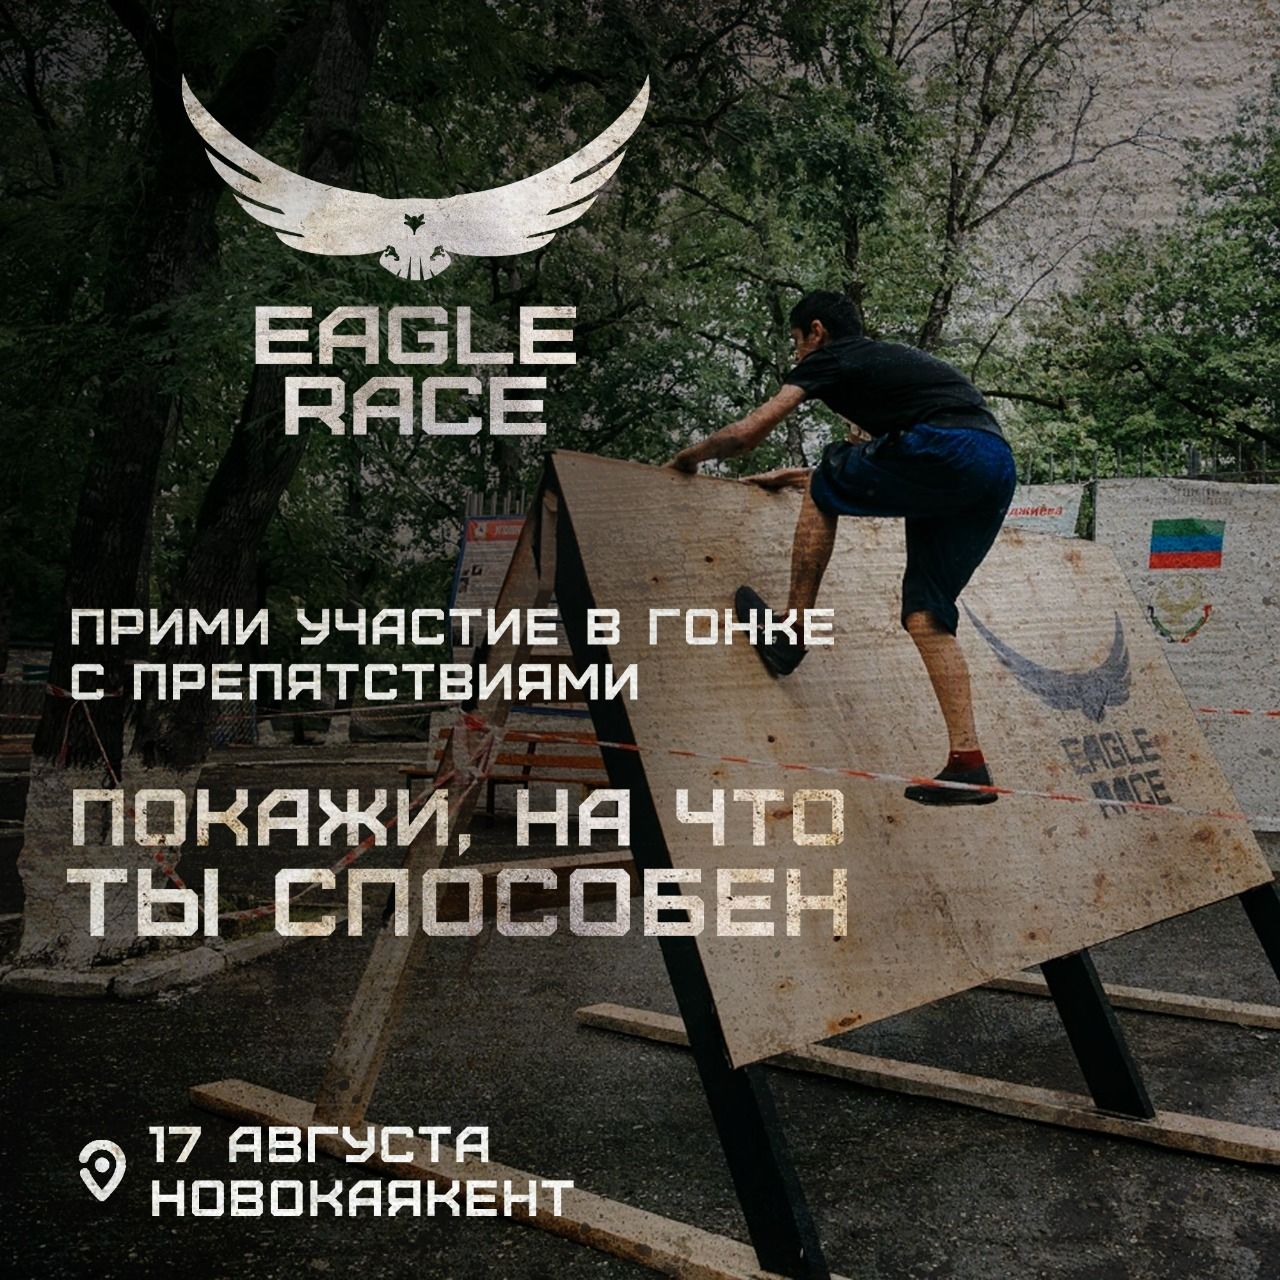 В Дагестане пройдет забег с препятствиями Eagle Race